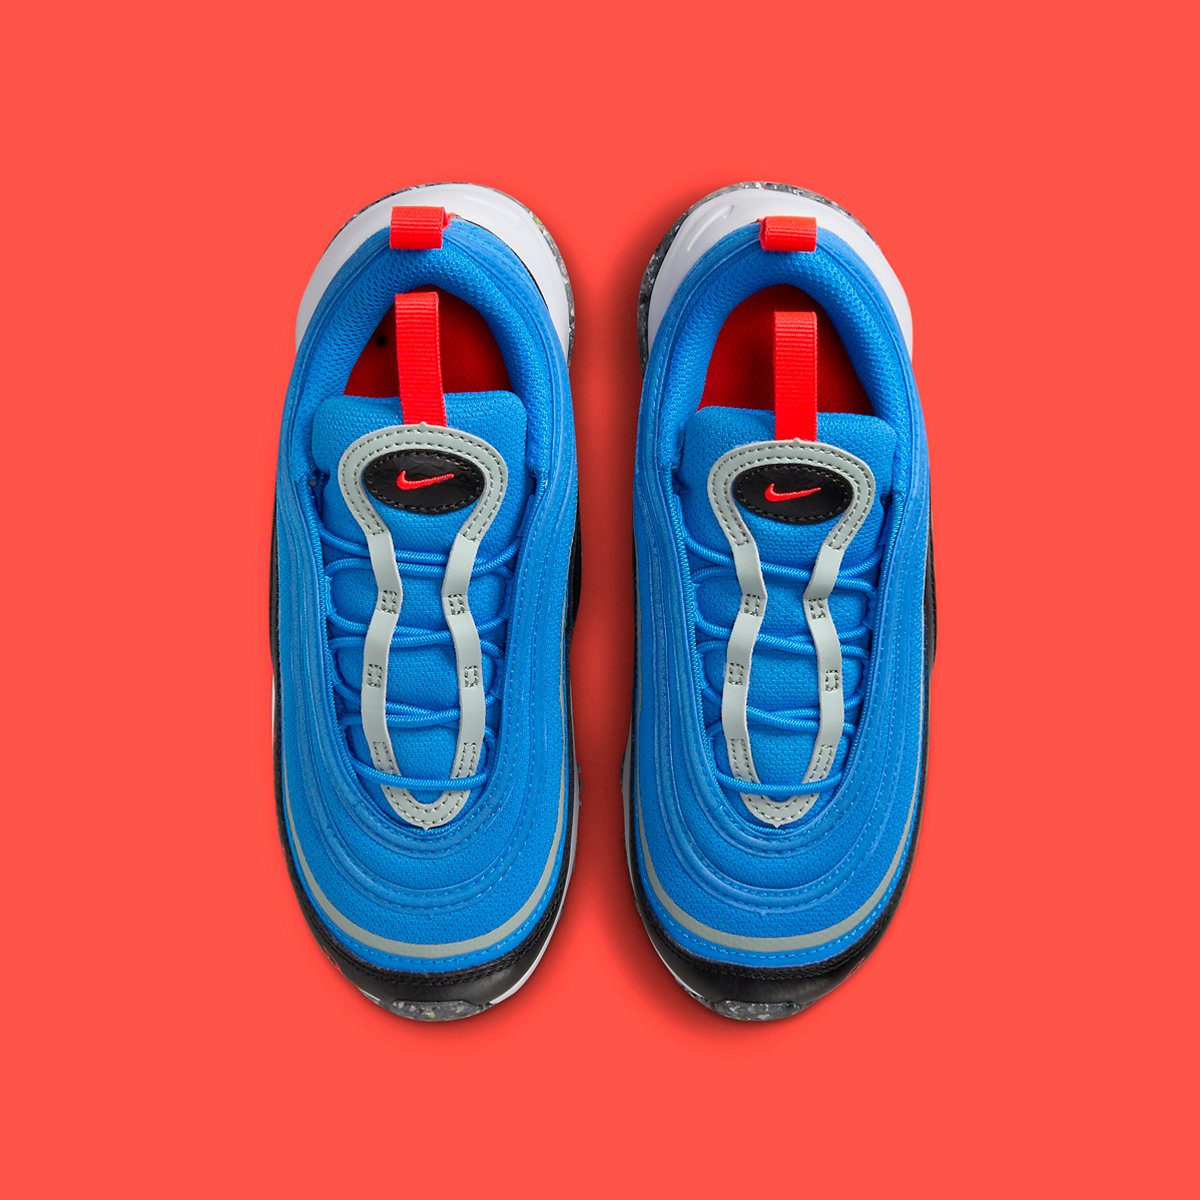 Nike Nike Cortez Classic Azul Oscuro y Amarillas cantidad Gs Just Do It Fb9111 400 5